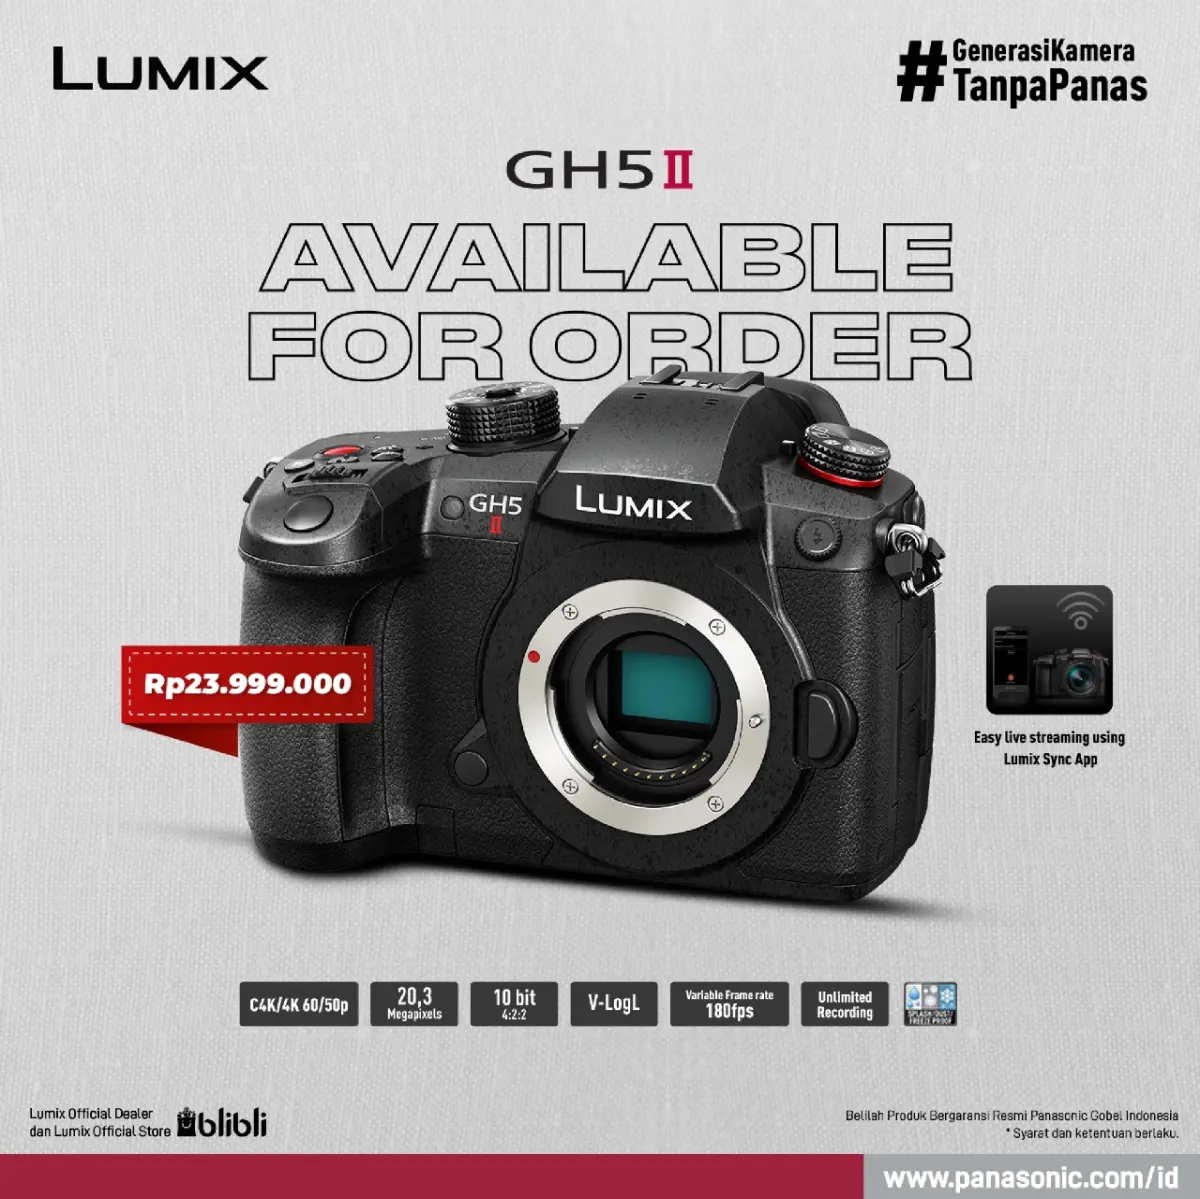 Panasonic Lumix GH5M2 2